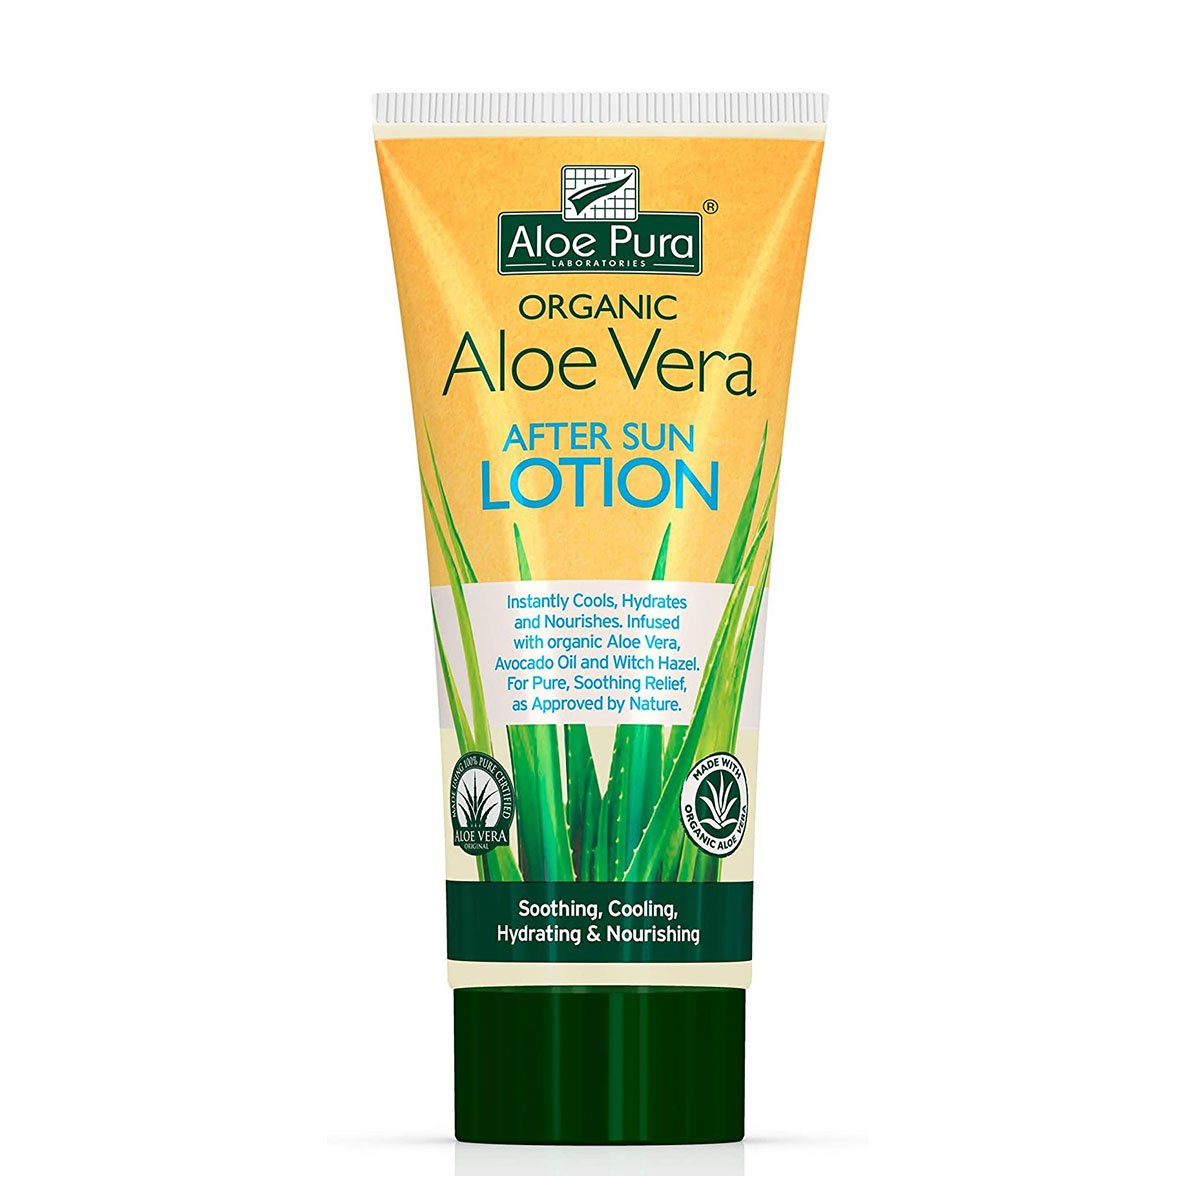 Aloe Pura Organic Aloe Vera After Sun Lotion 200ml